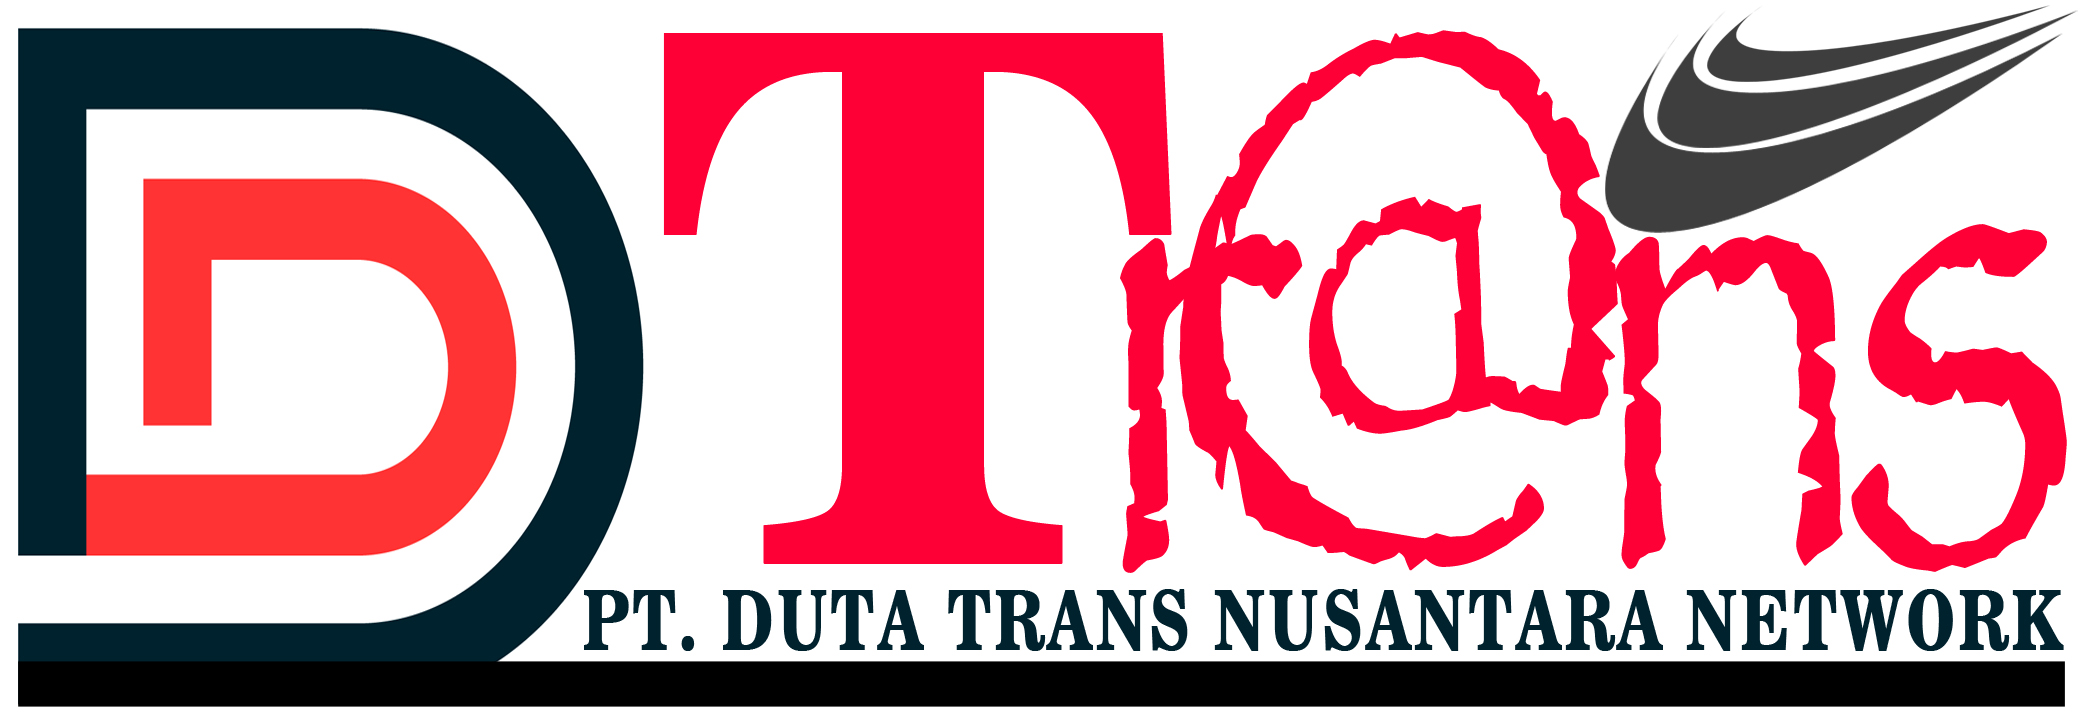 PT DUTA TRANS NUSANTARA NETWORK